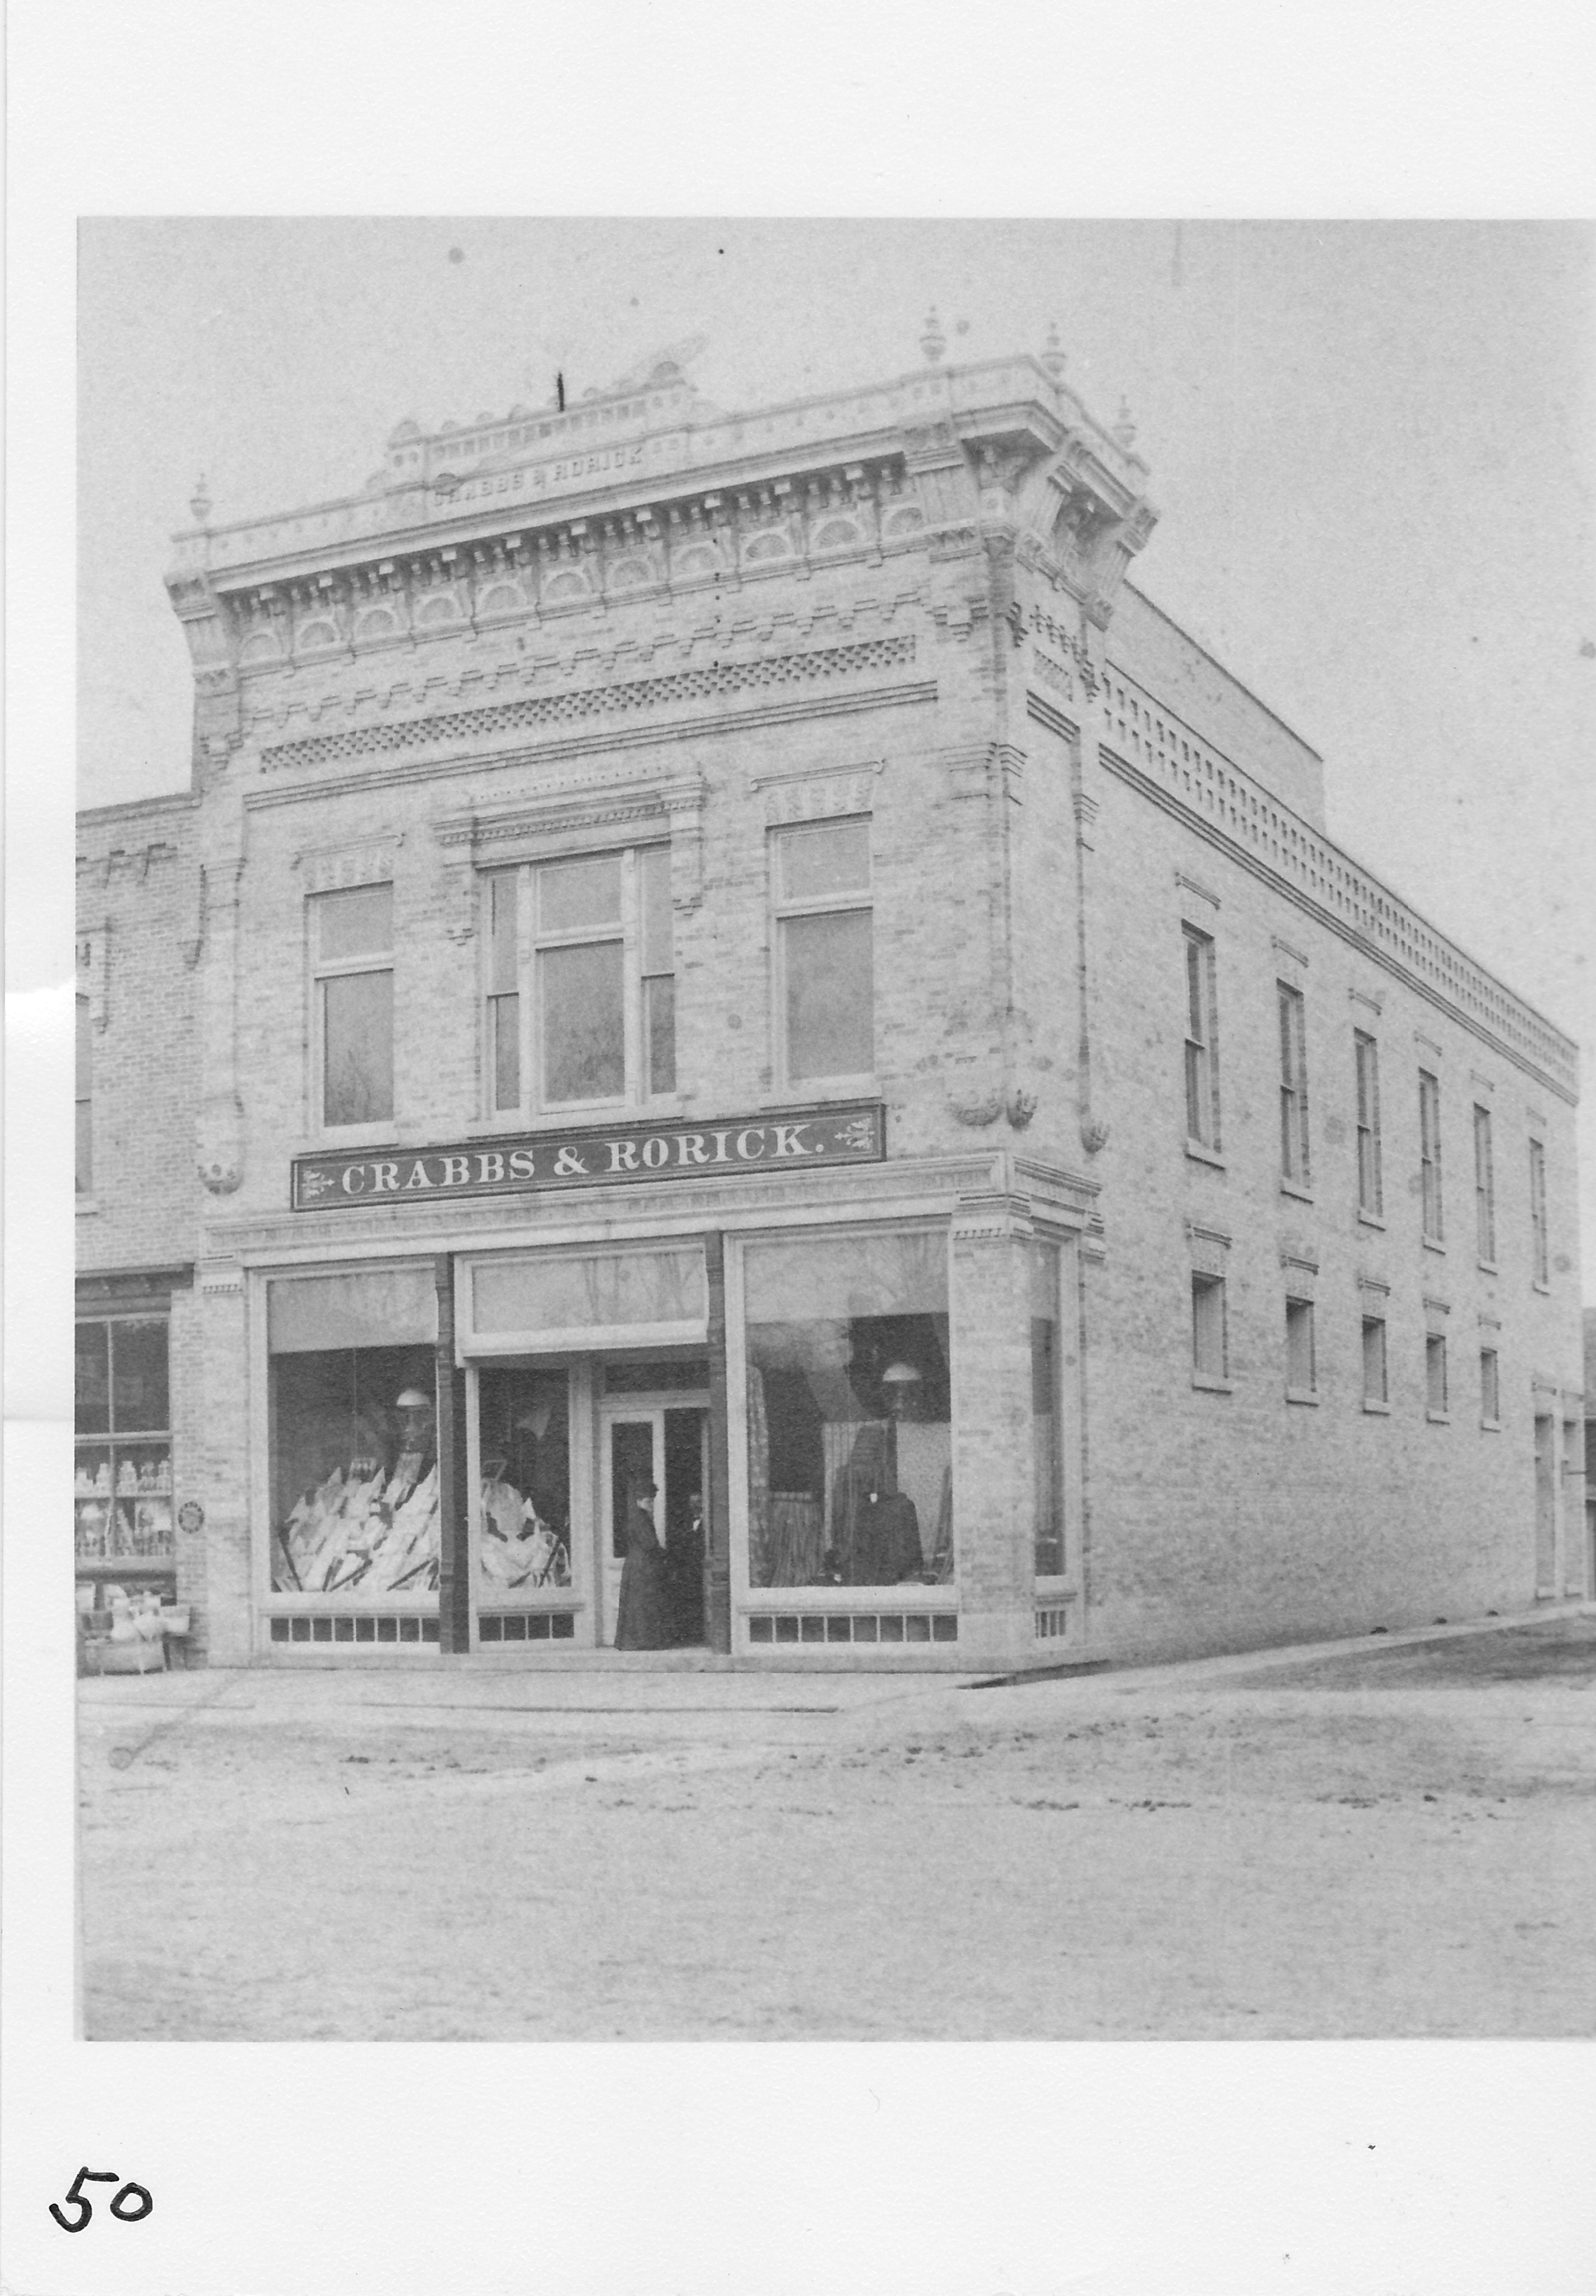 Crabbs & Rorick Dry Goods Store built in 1889. Later Winzeler’s 5c.-$1.00.